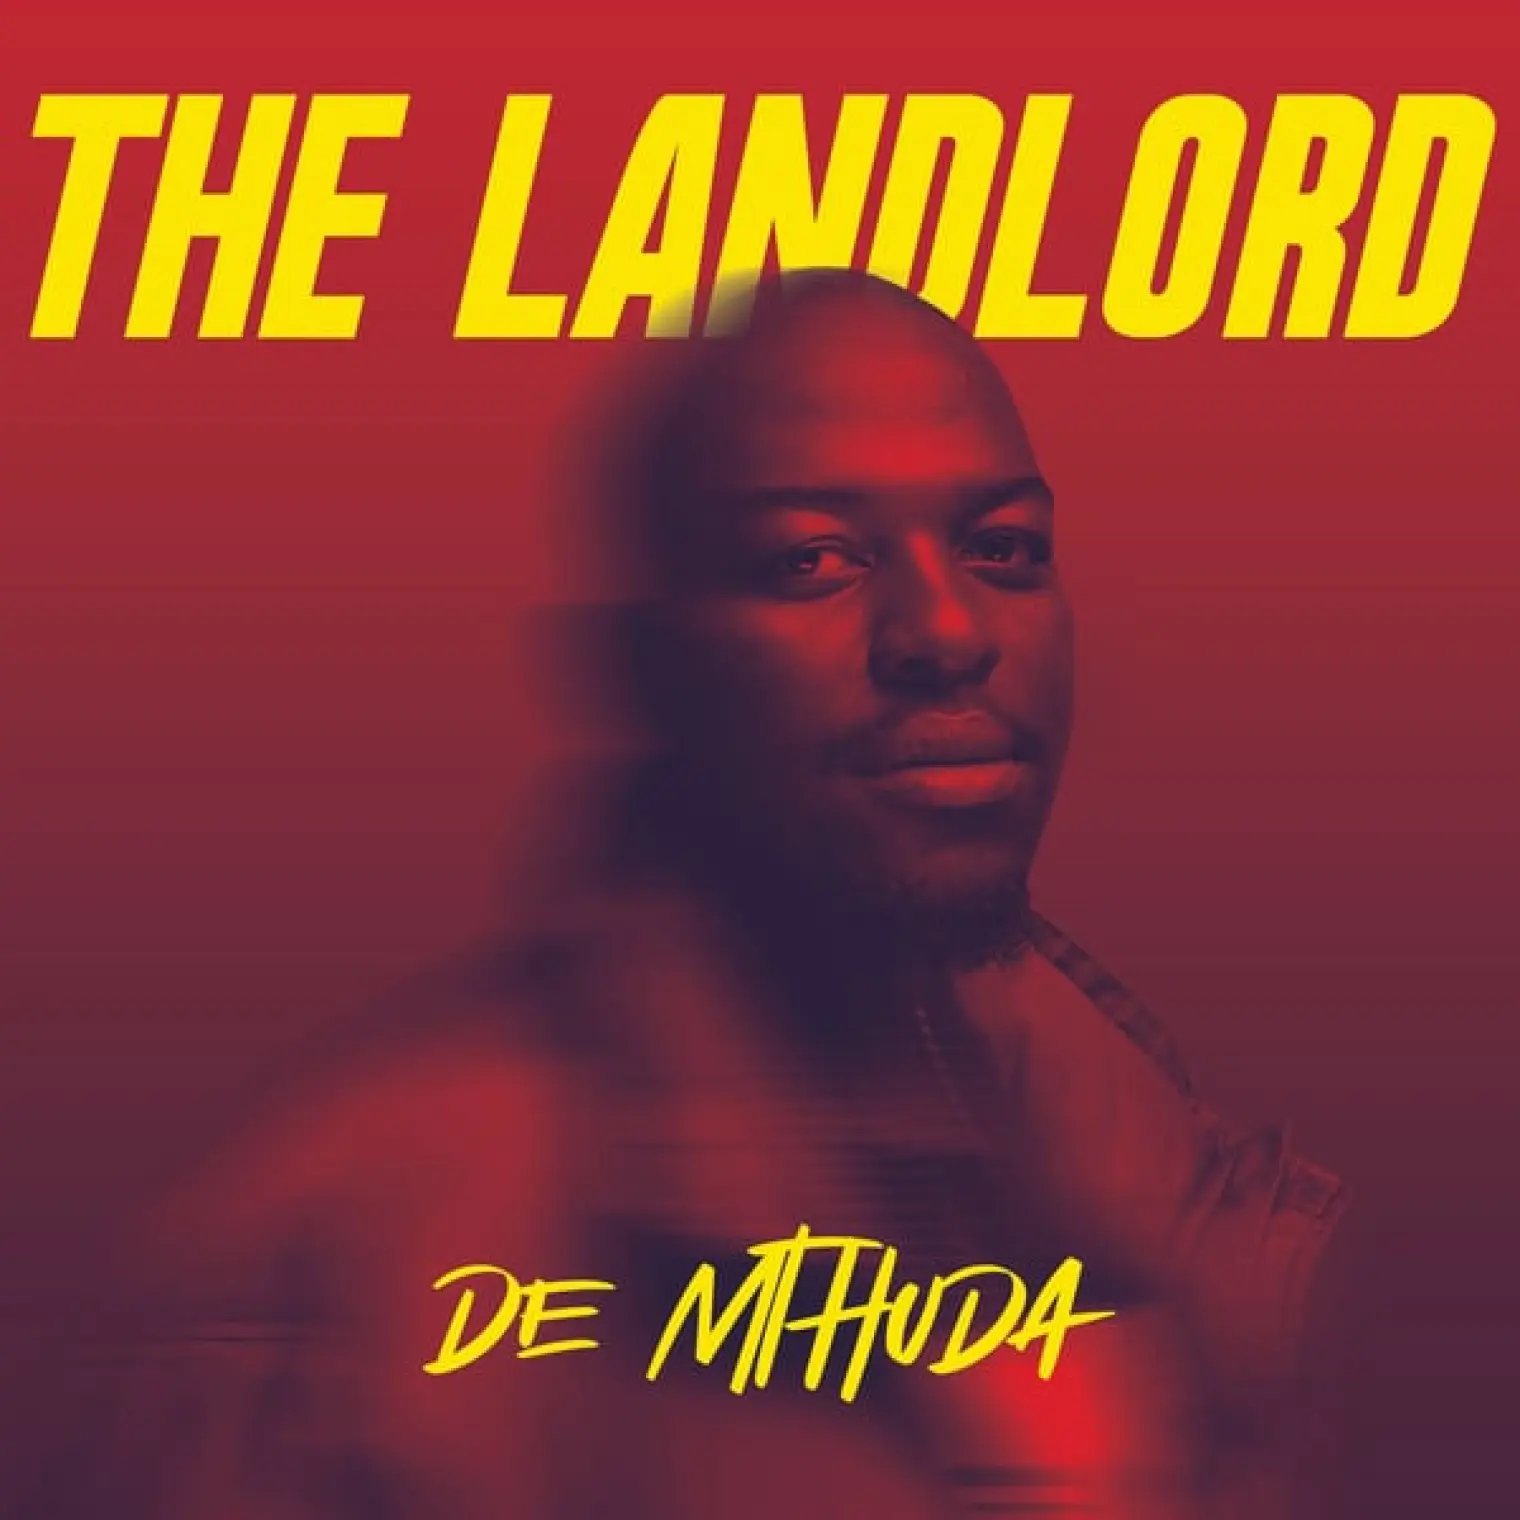 The Landlord -  De Mthuda 